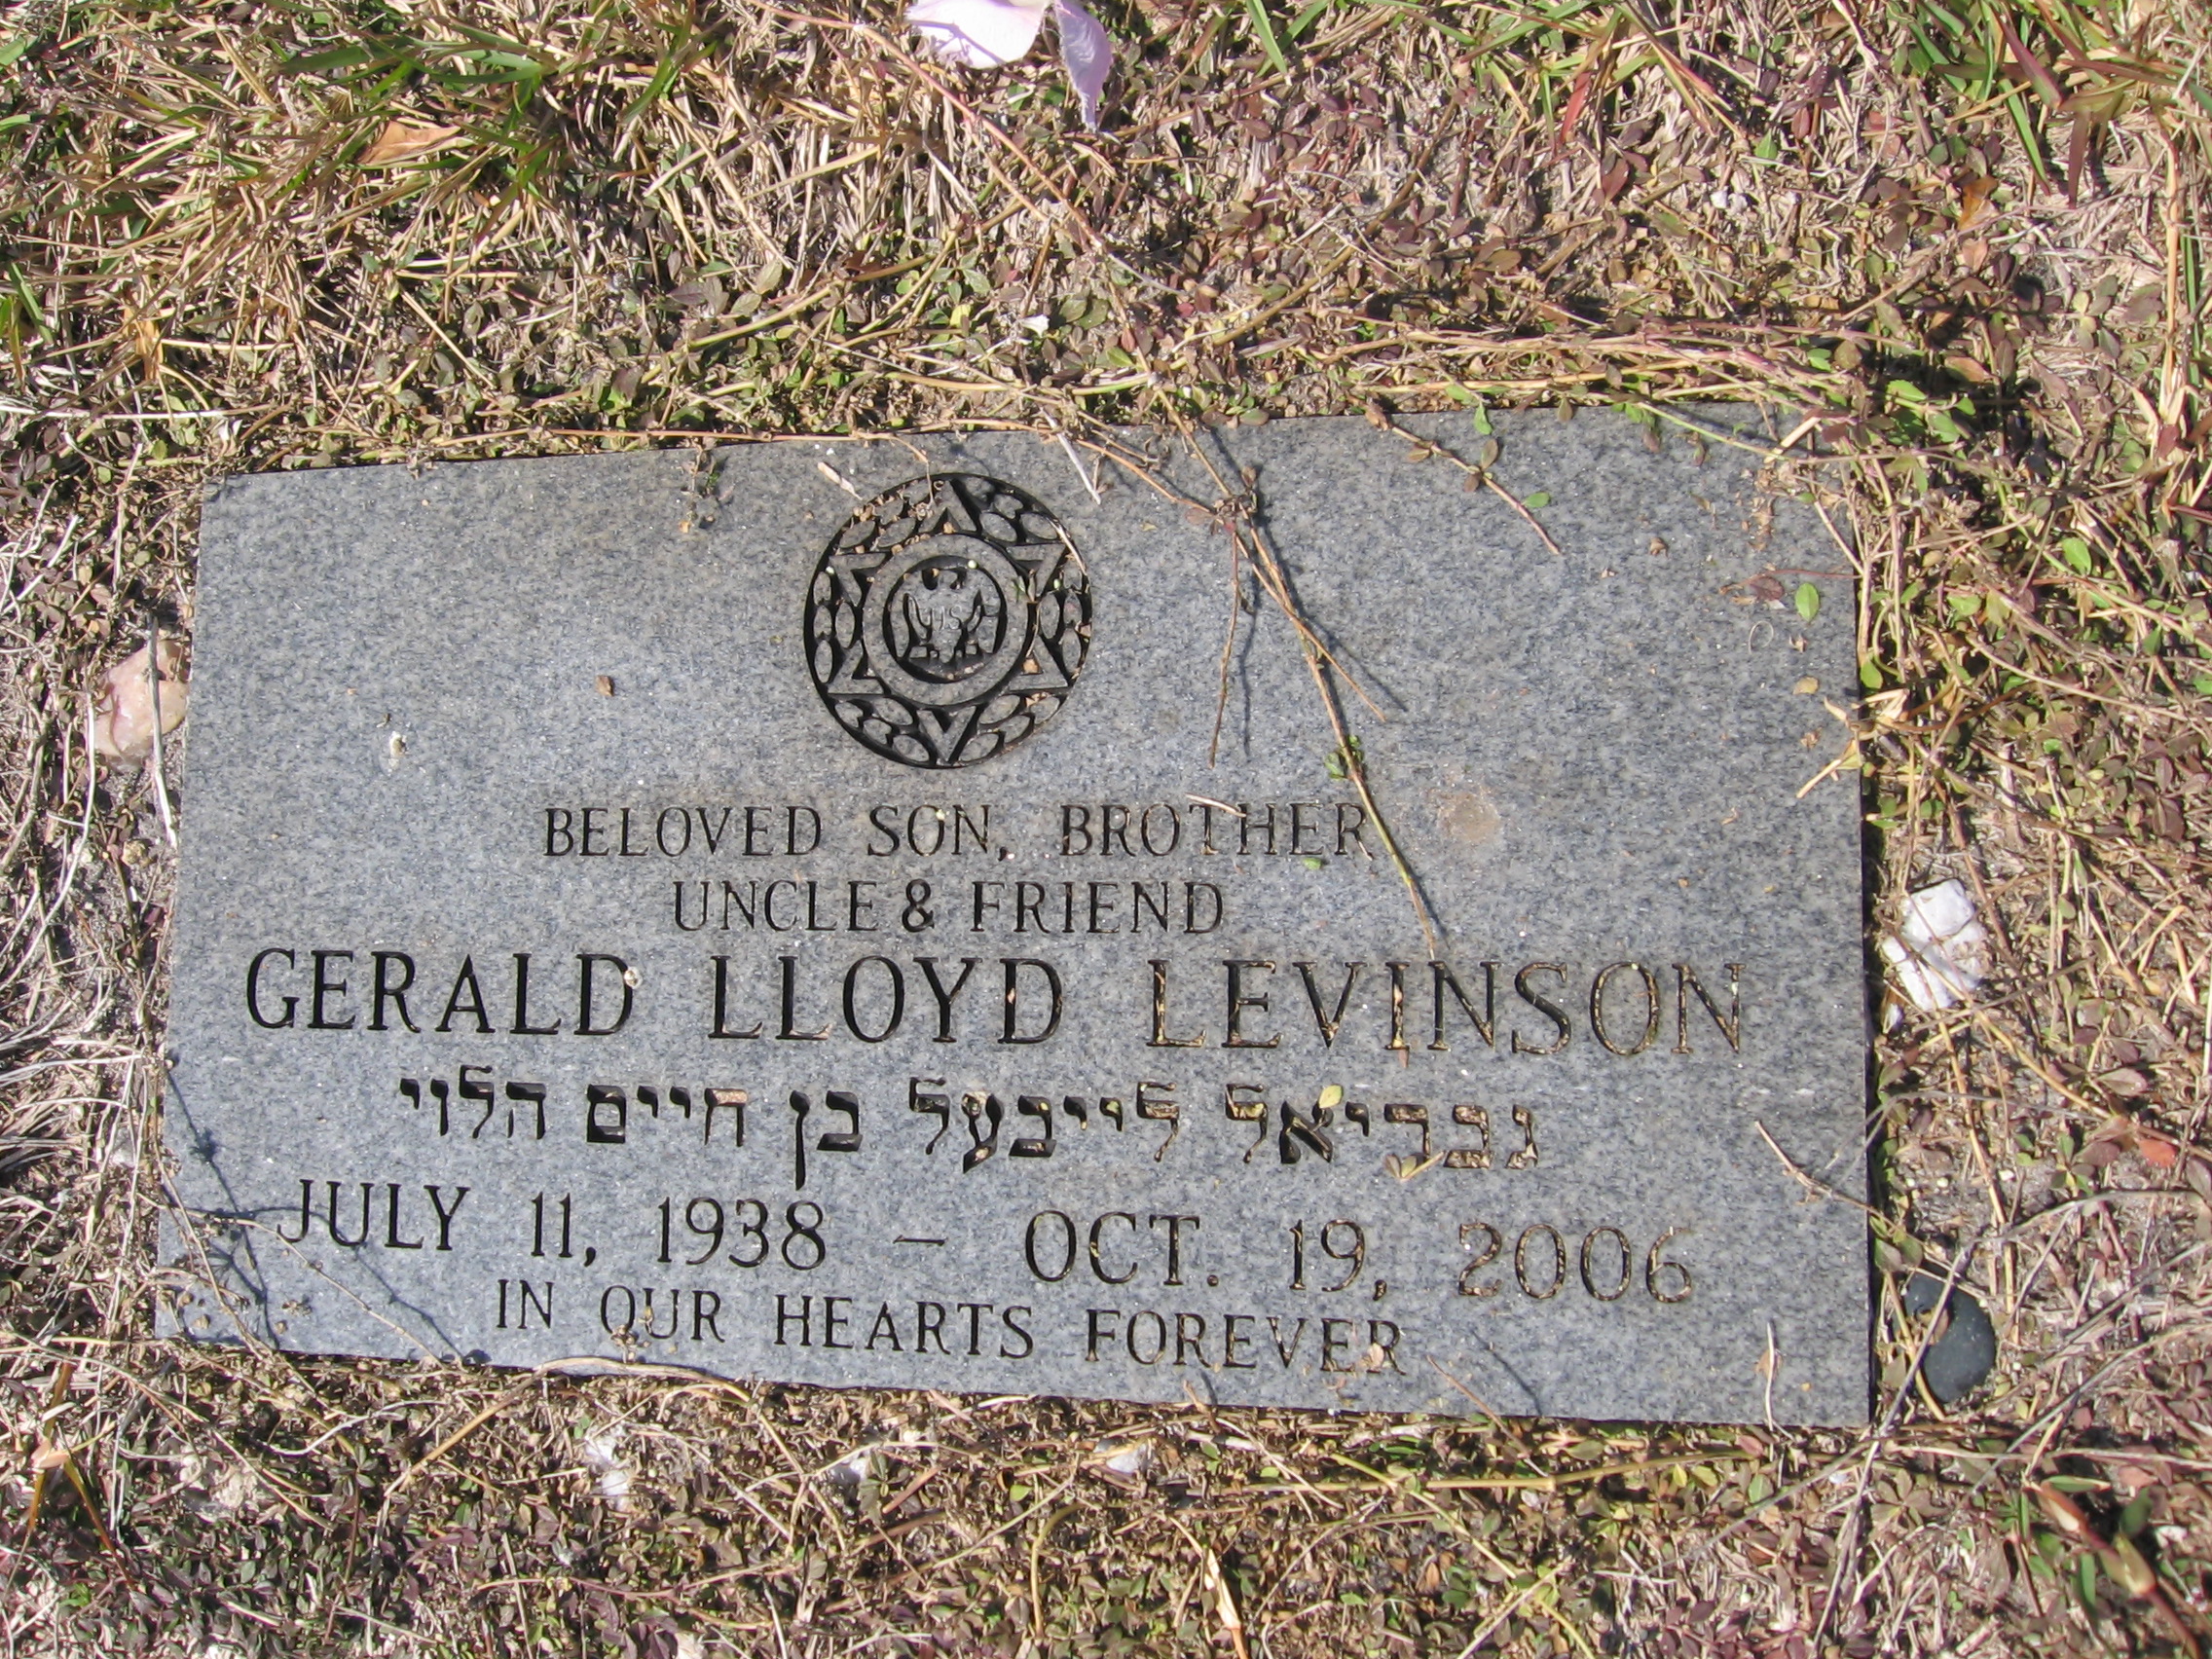 Gerald Lloyd Levinson